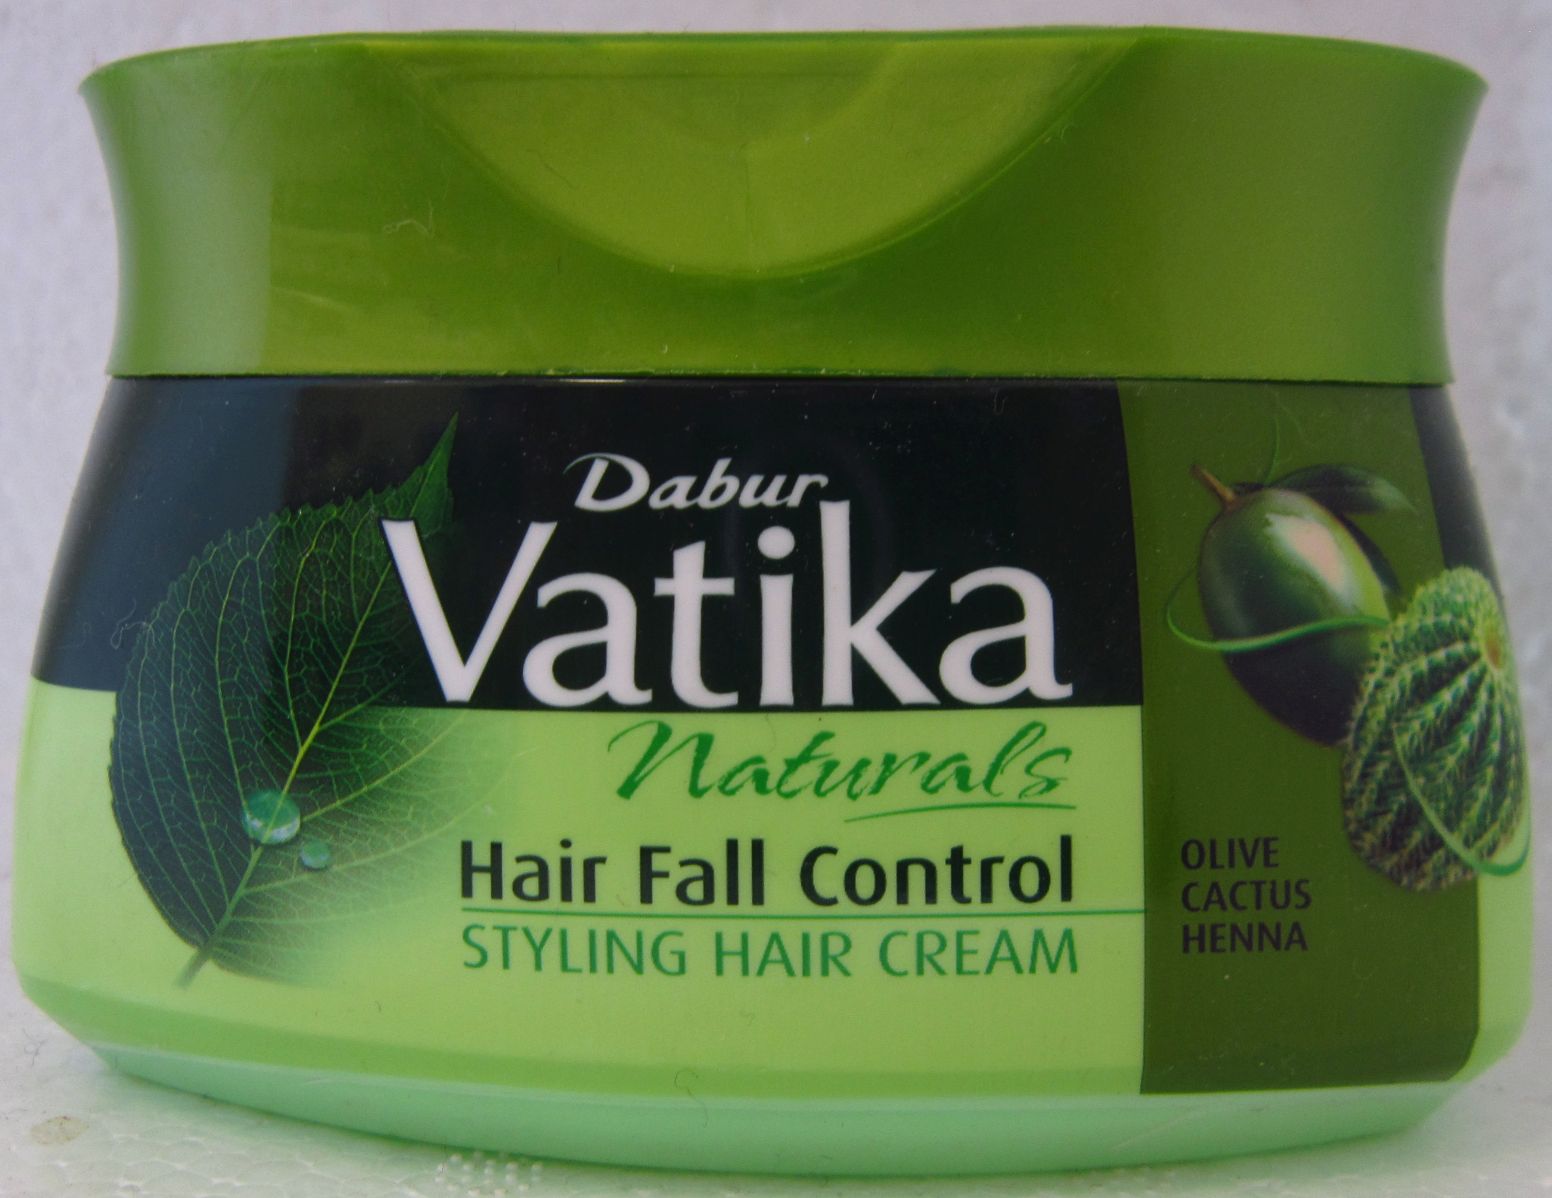 Dabur Vatika Hair Fall Control styling hair cream Image